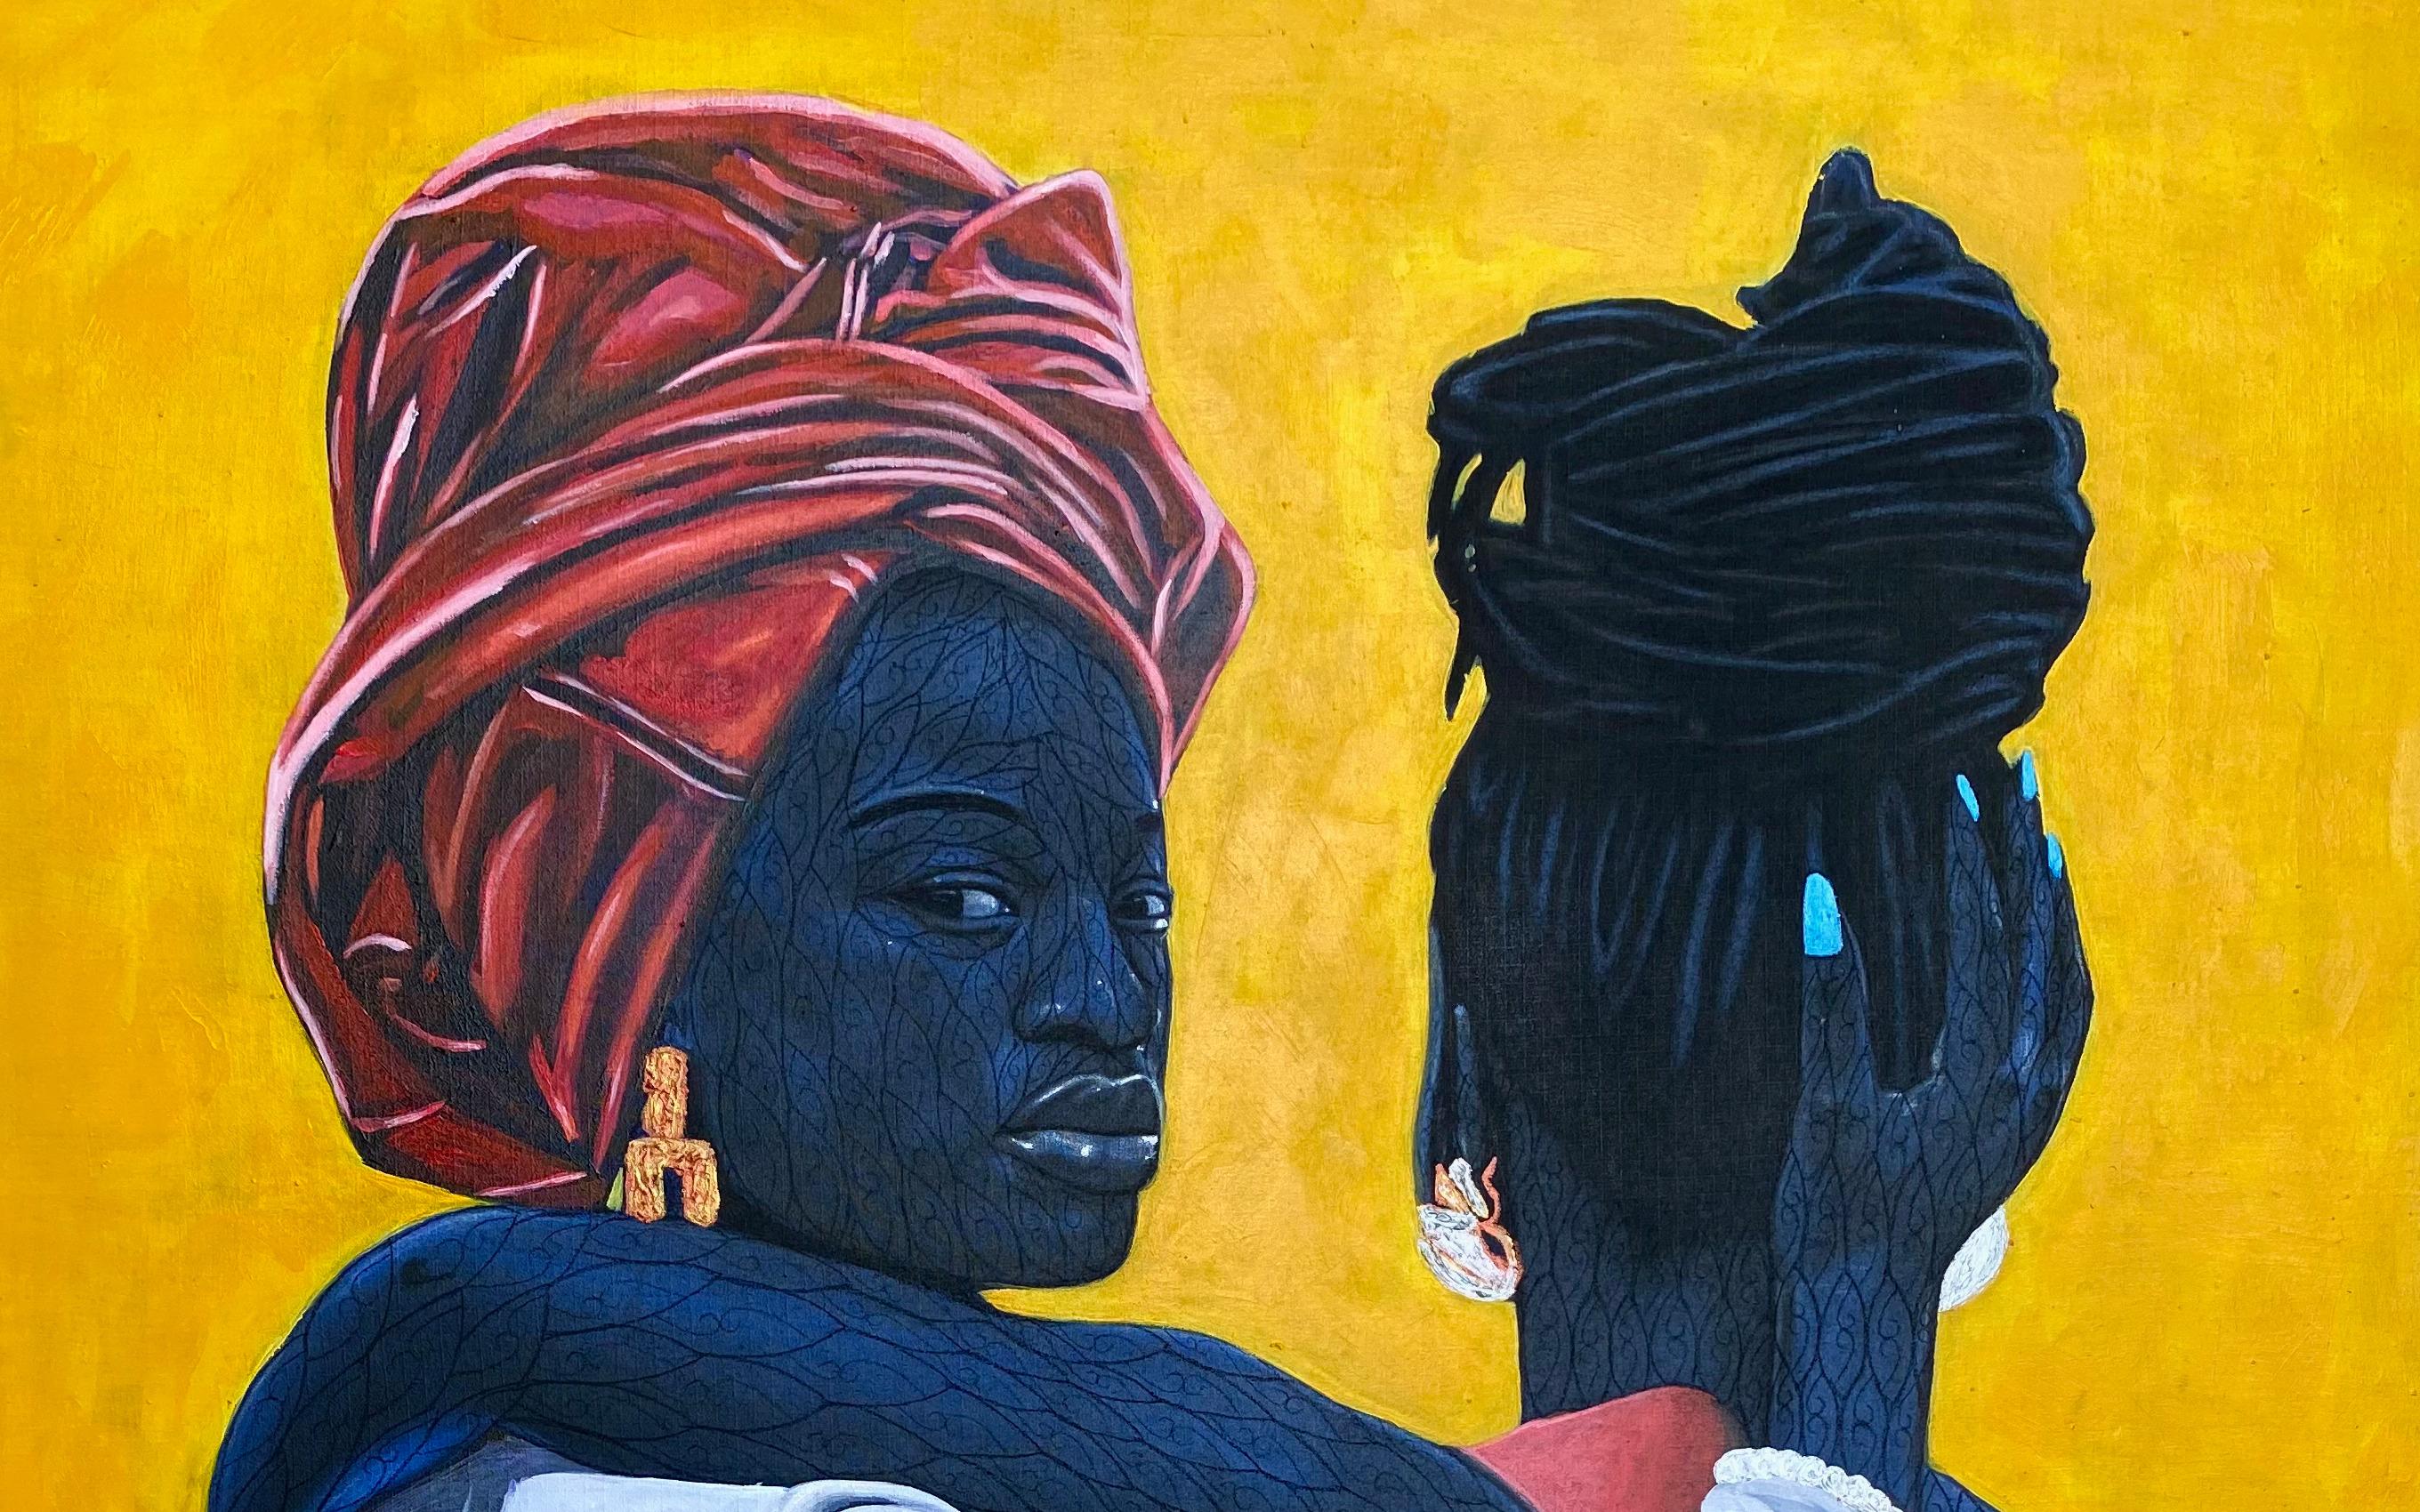 Sisterhood (The Love We Share) - Painting by Taiwo Odejinmi